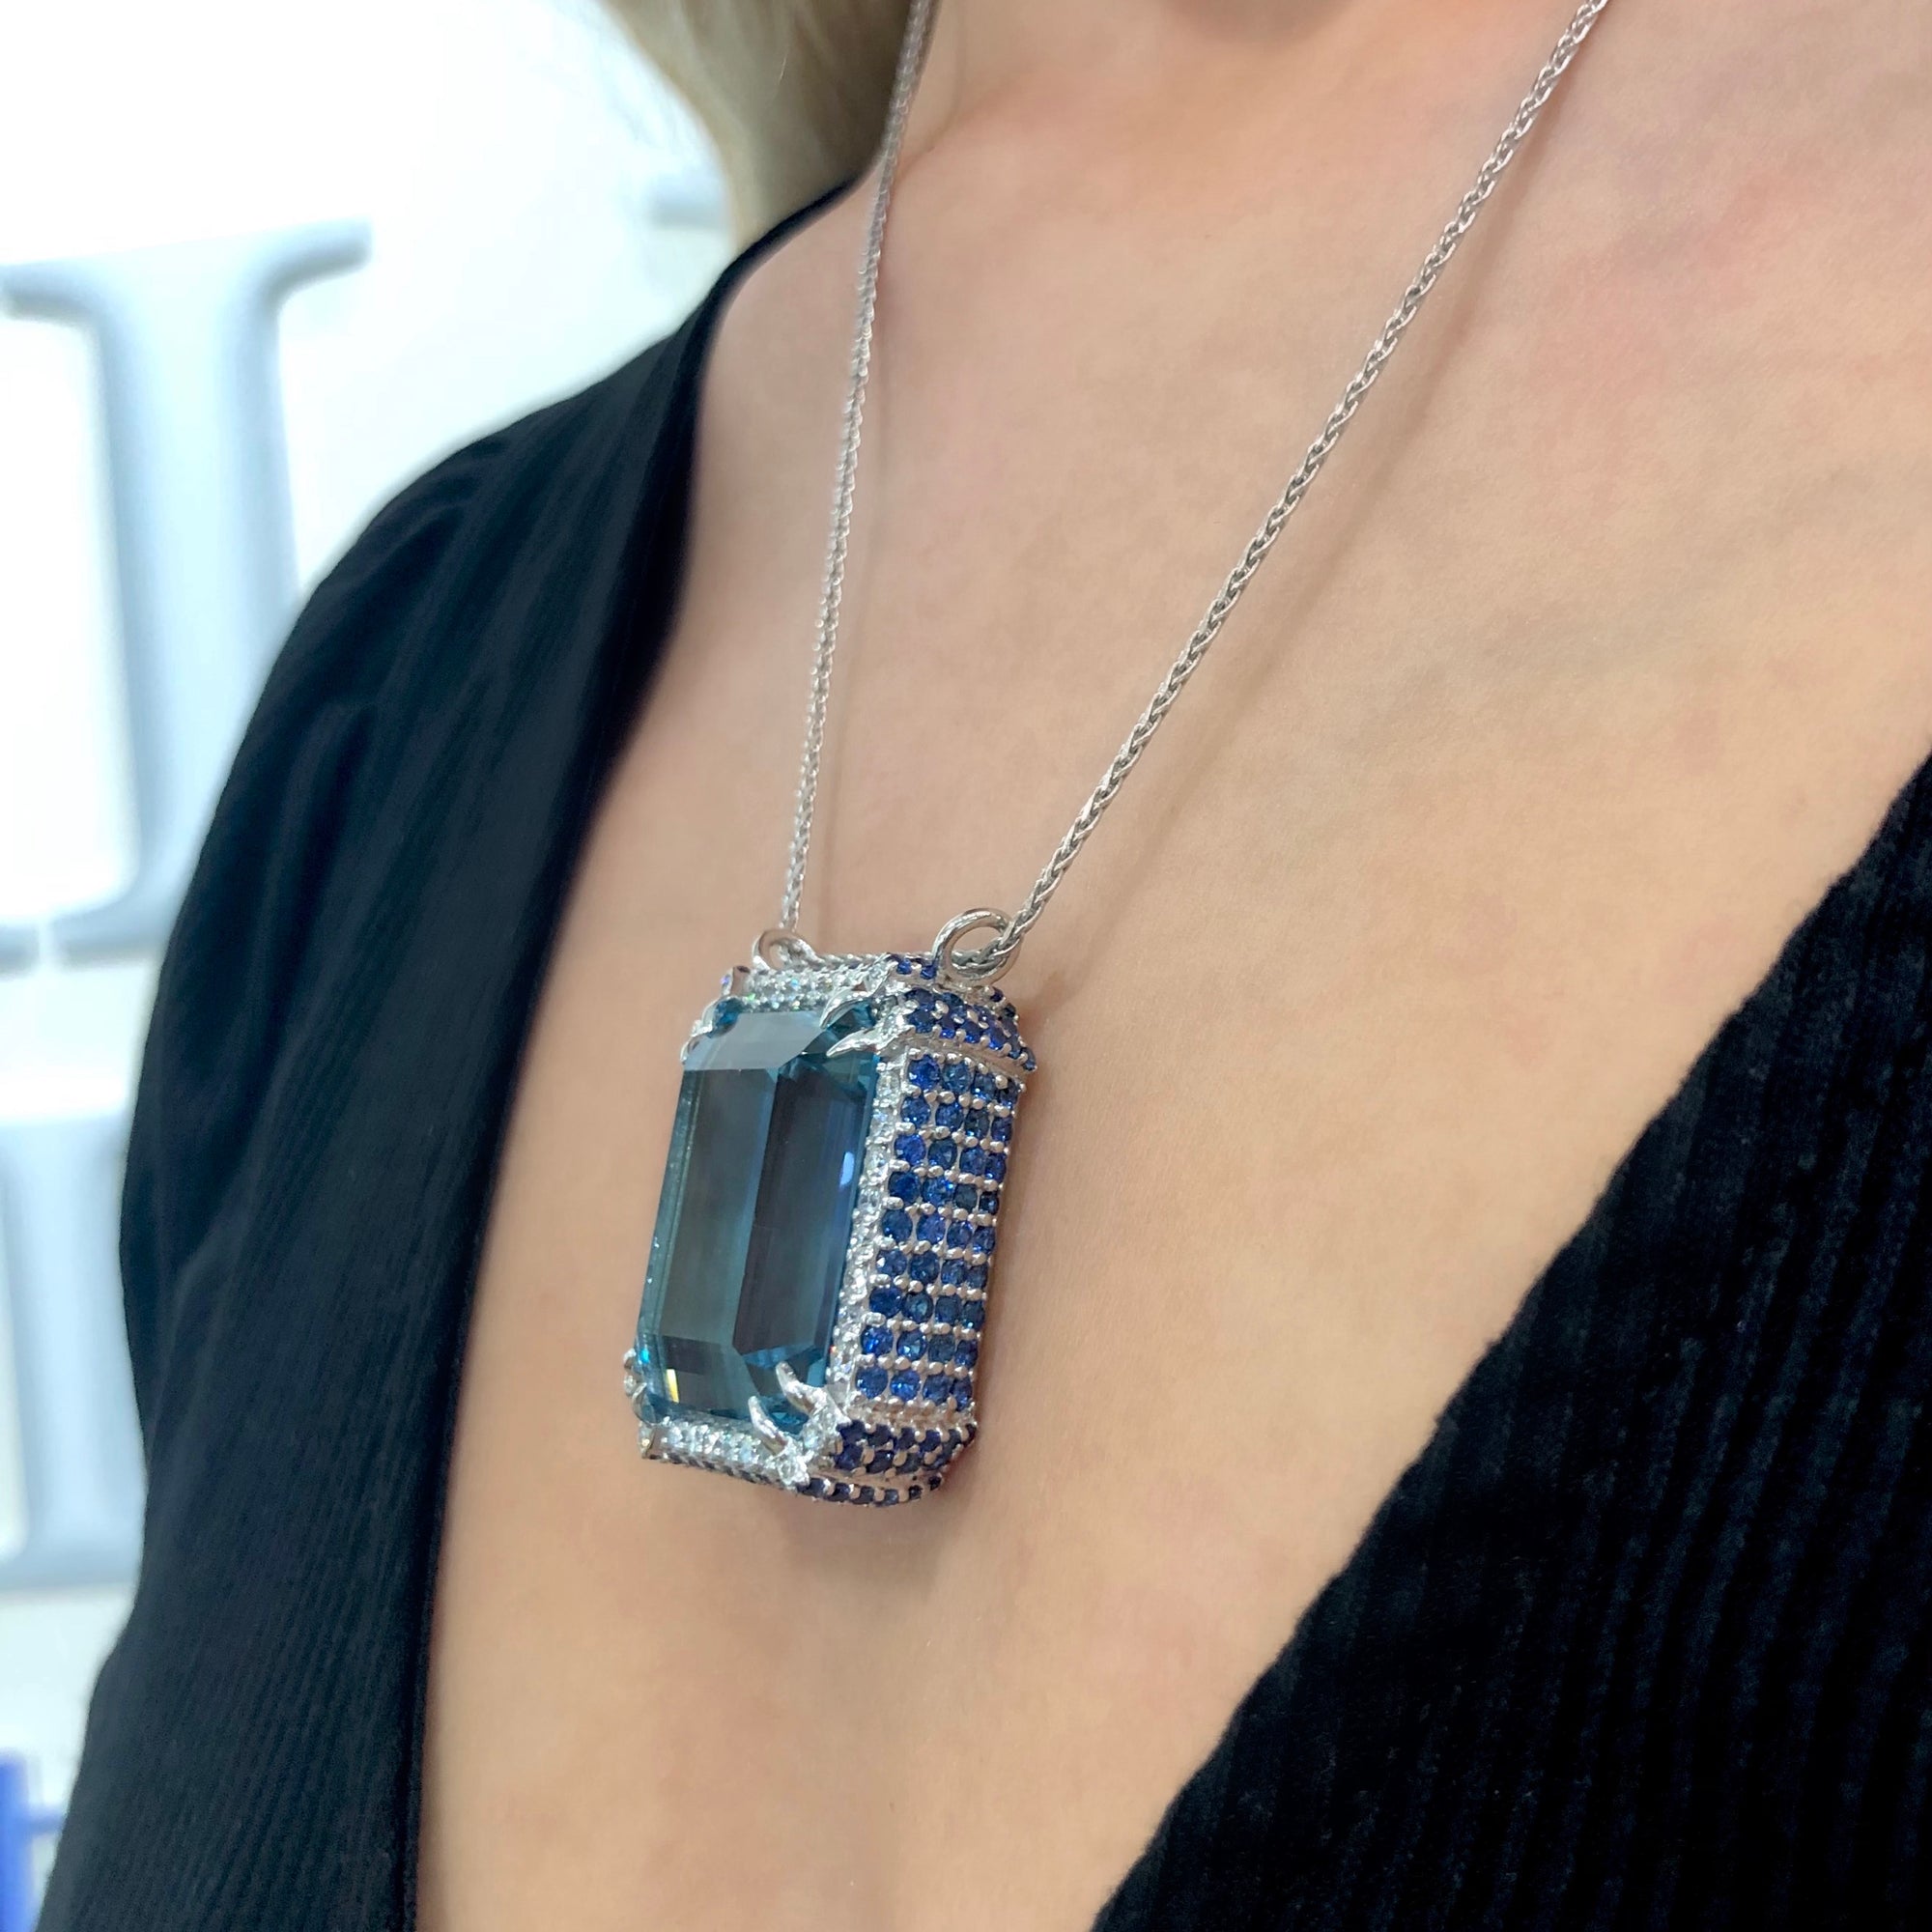 Aquamarine Pendant with Sapphires and Diamonds